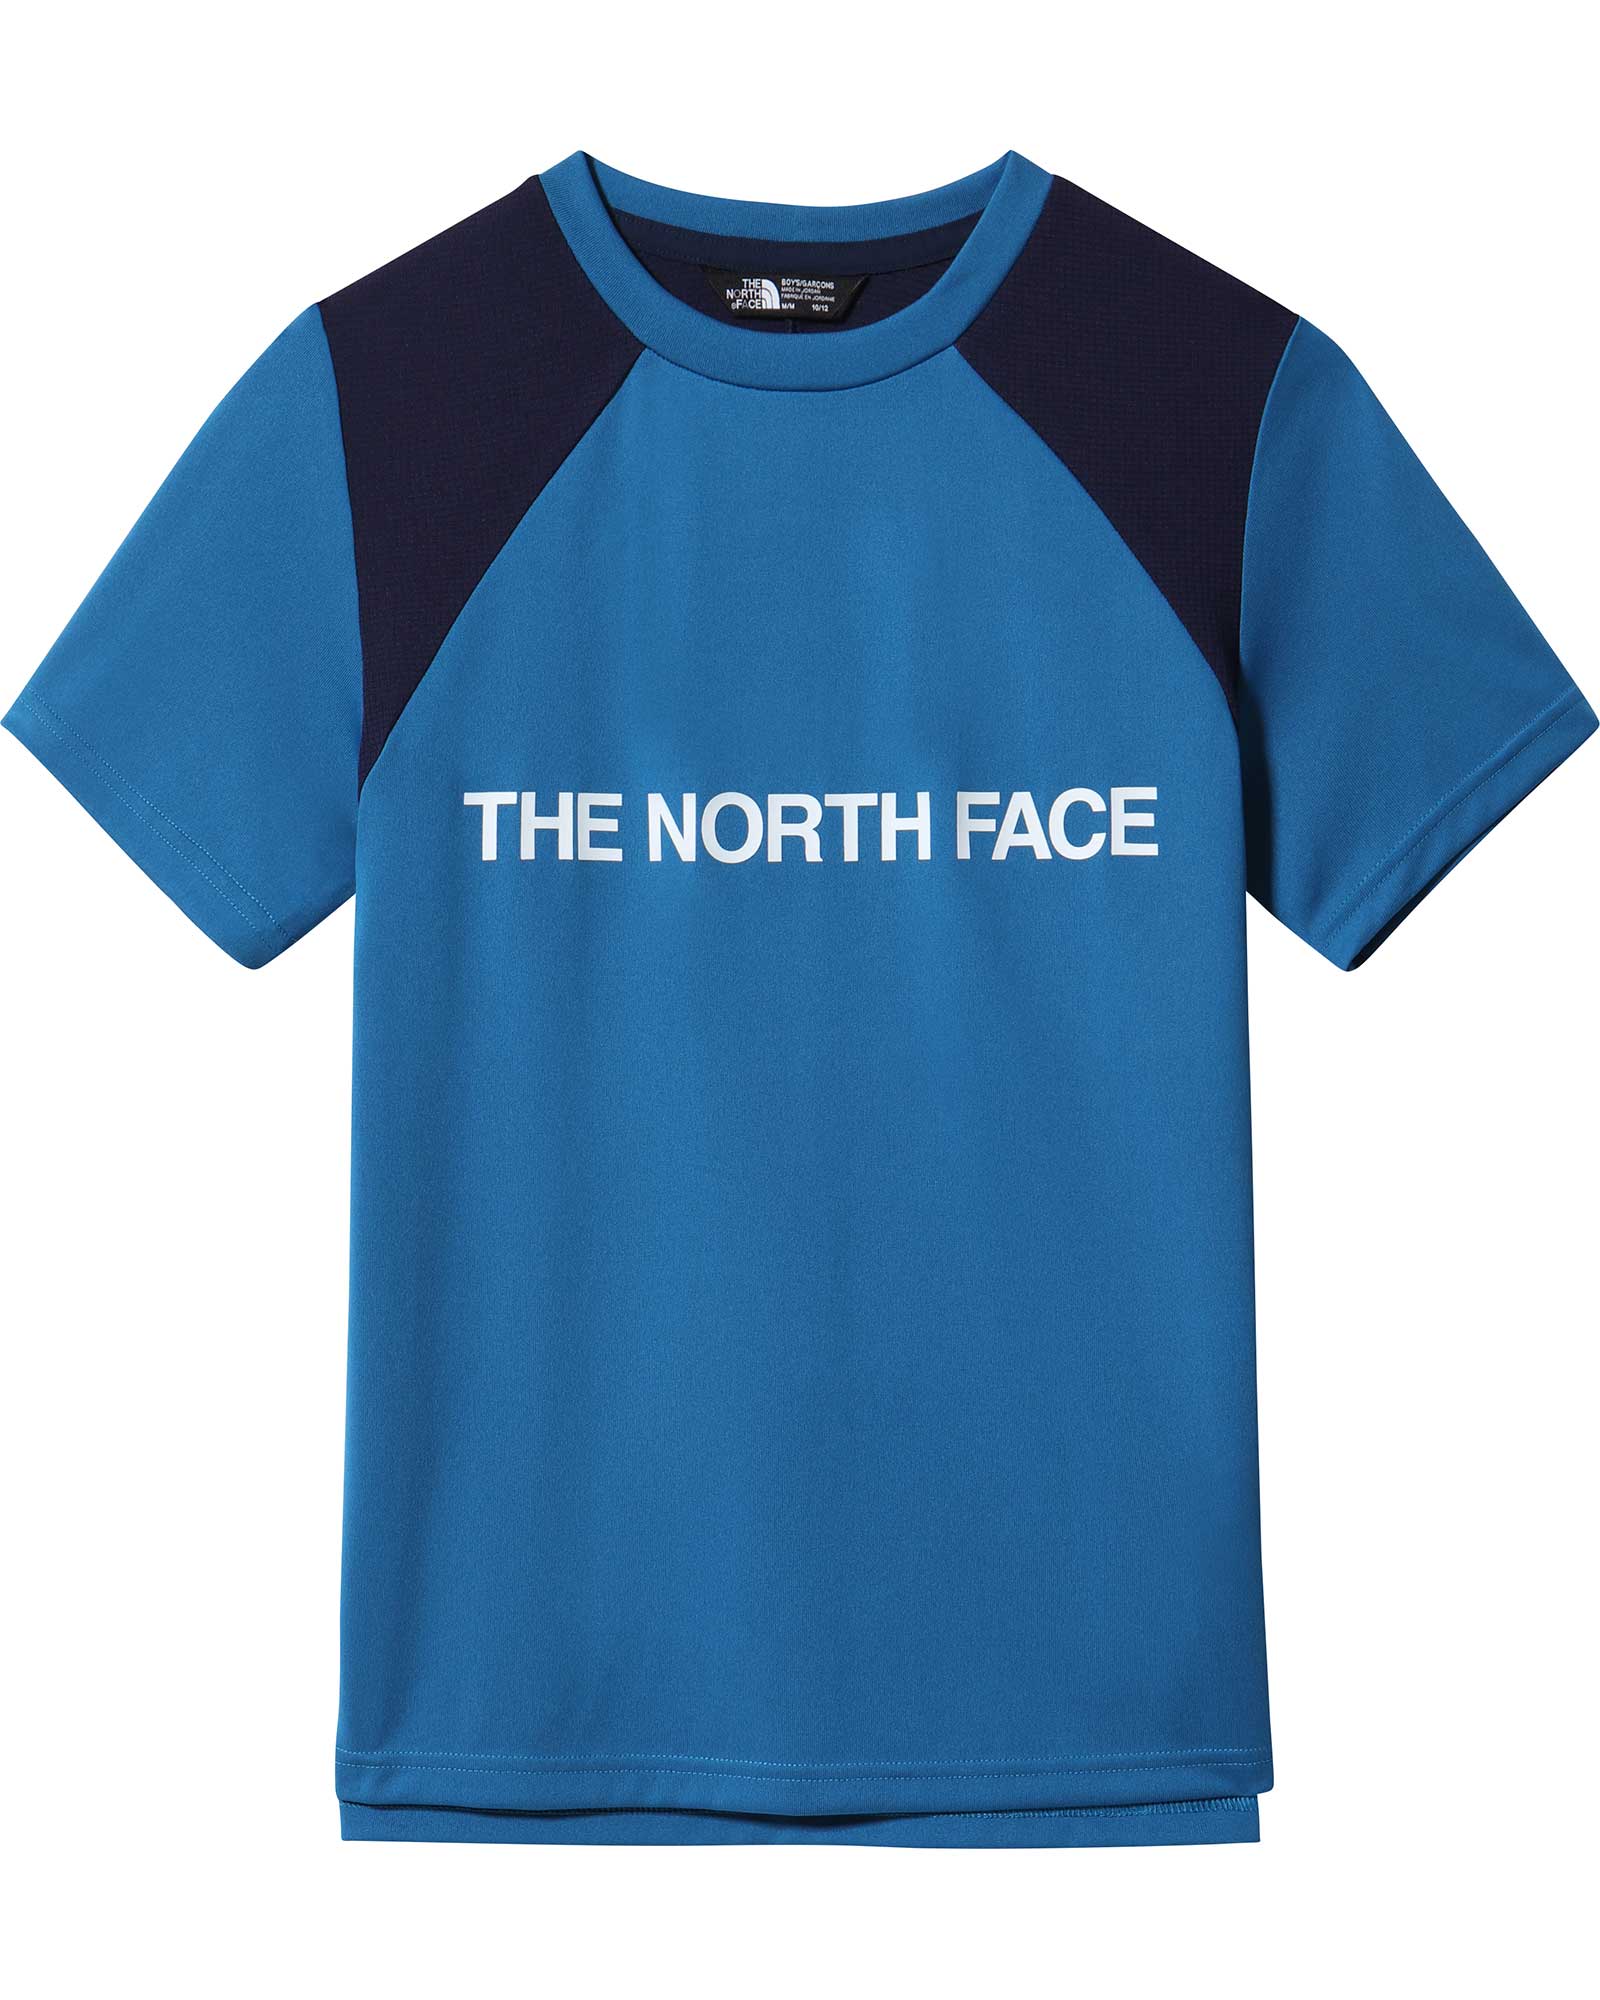 The North Face Never Stop Boys’ T Shirt XL - Banff Blue XL